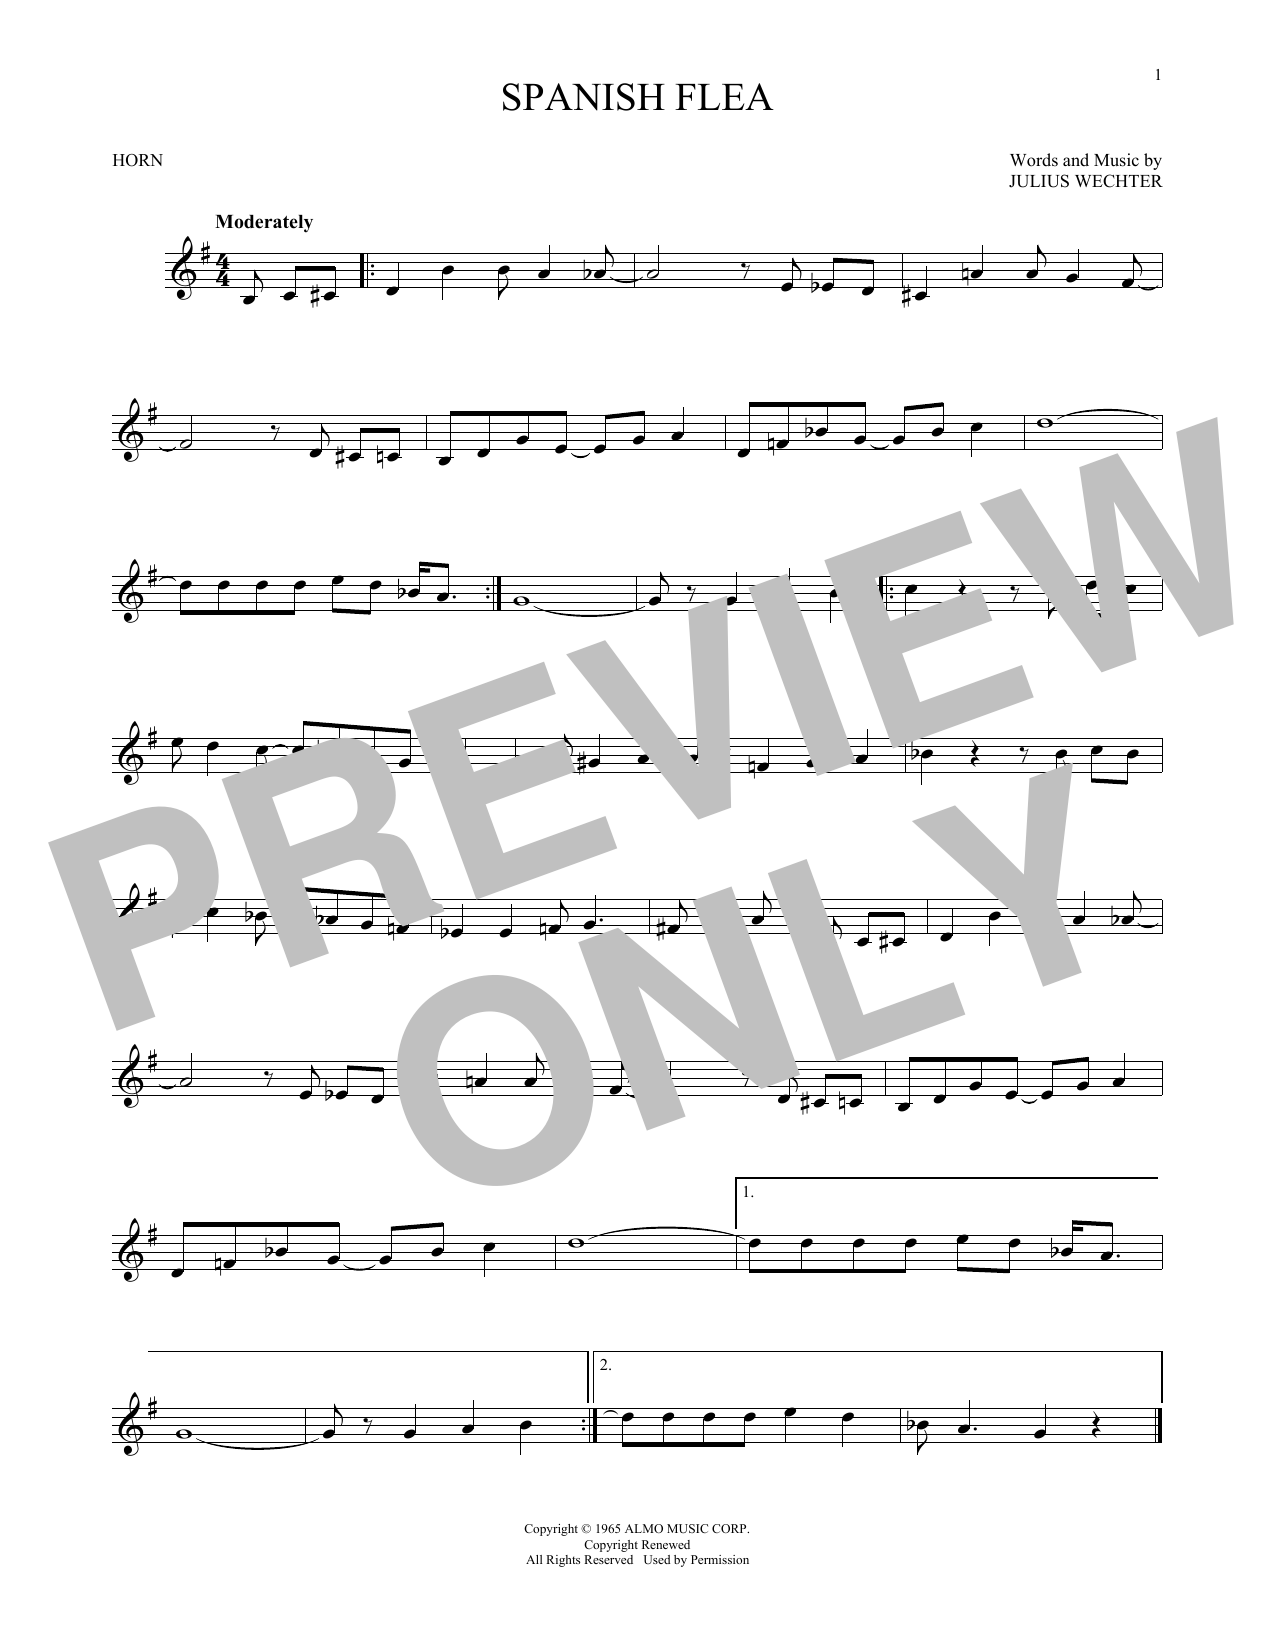 Herb Alpert & The Tijuana Brass Band Spanish Flea Sheet Music Notes & Chords for Flute - Download or Print PDF